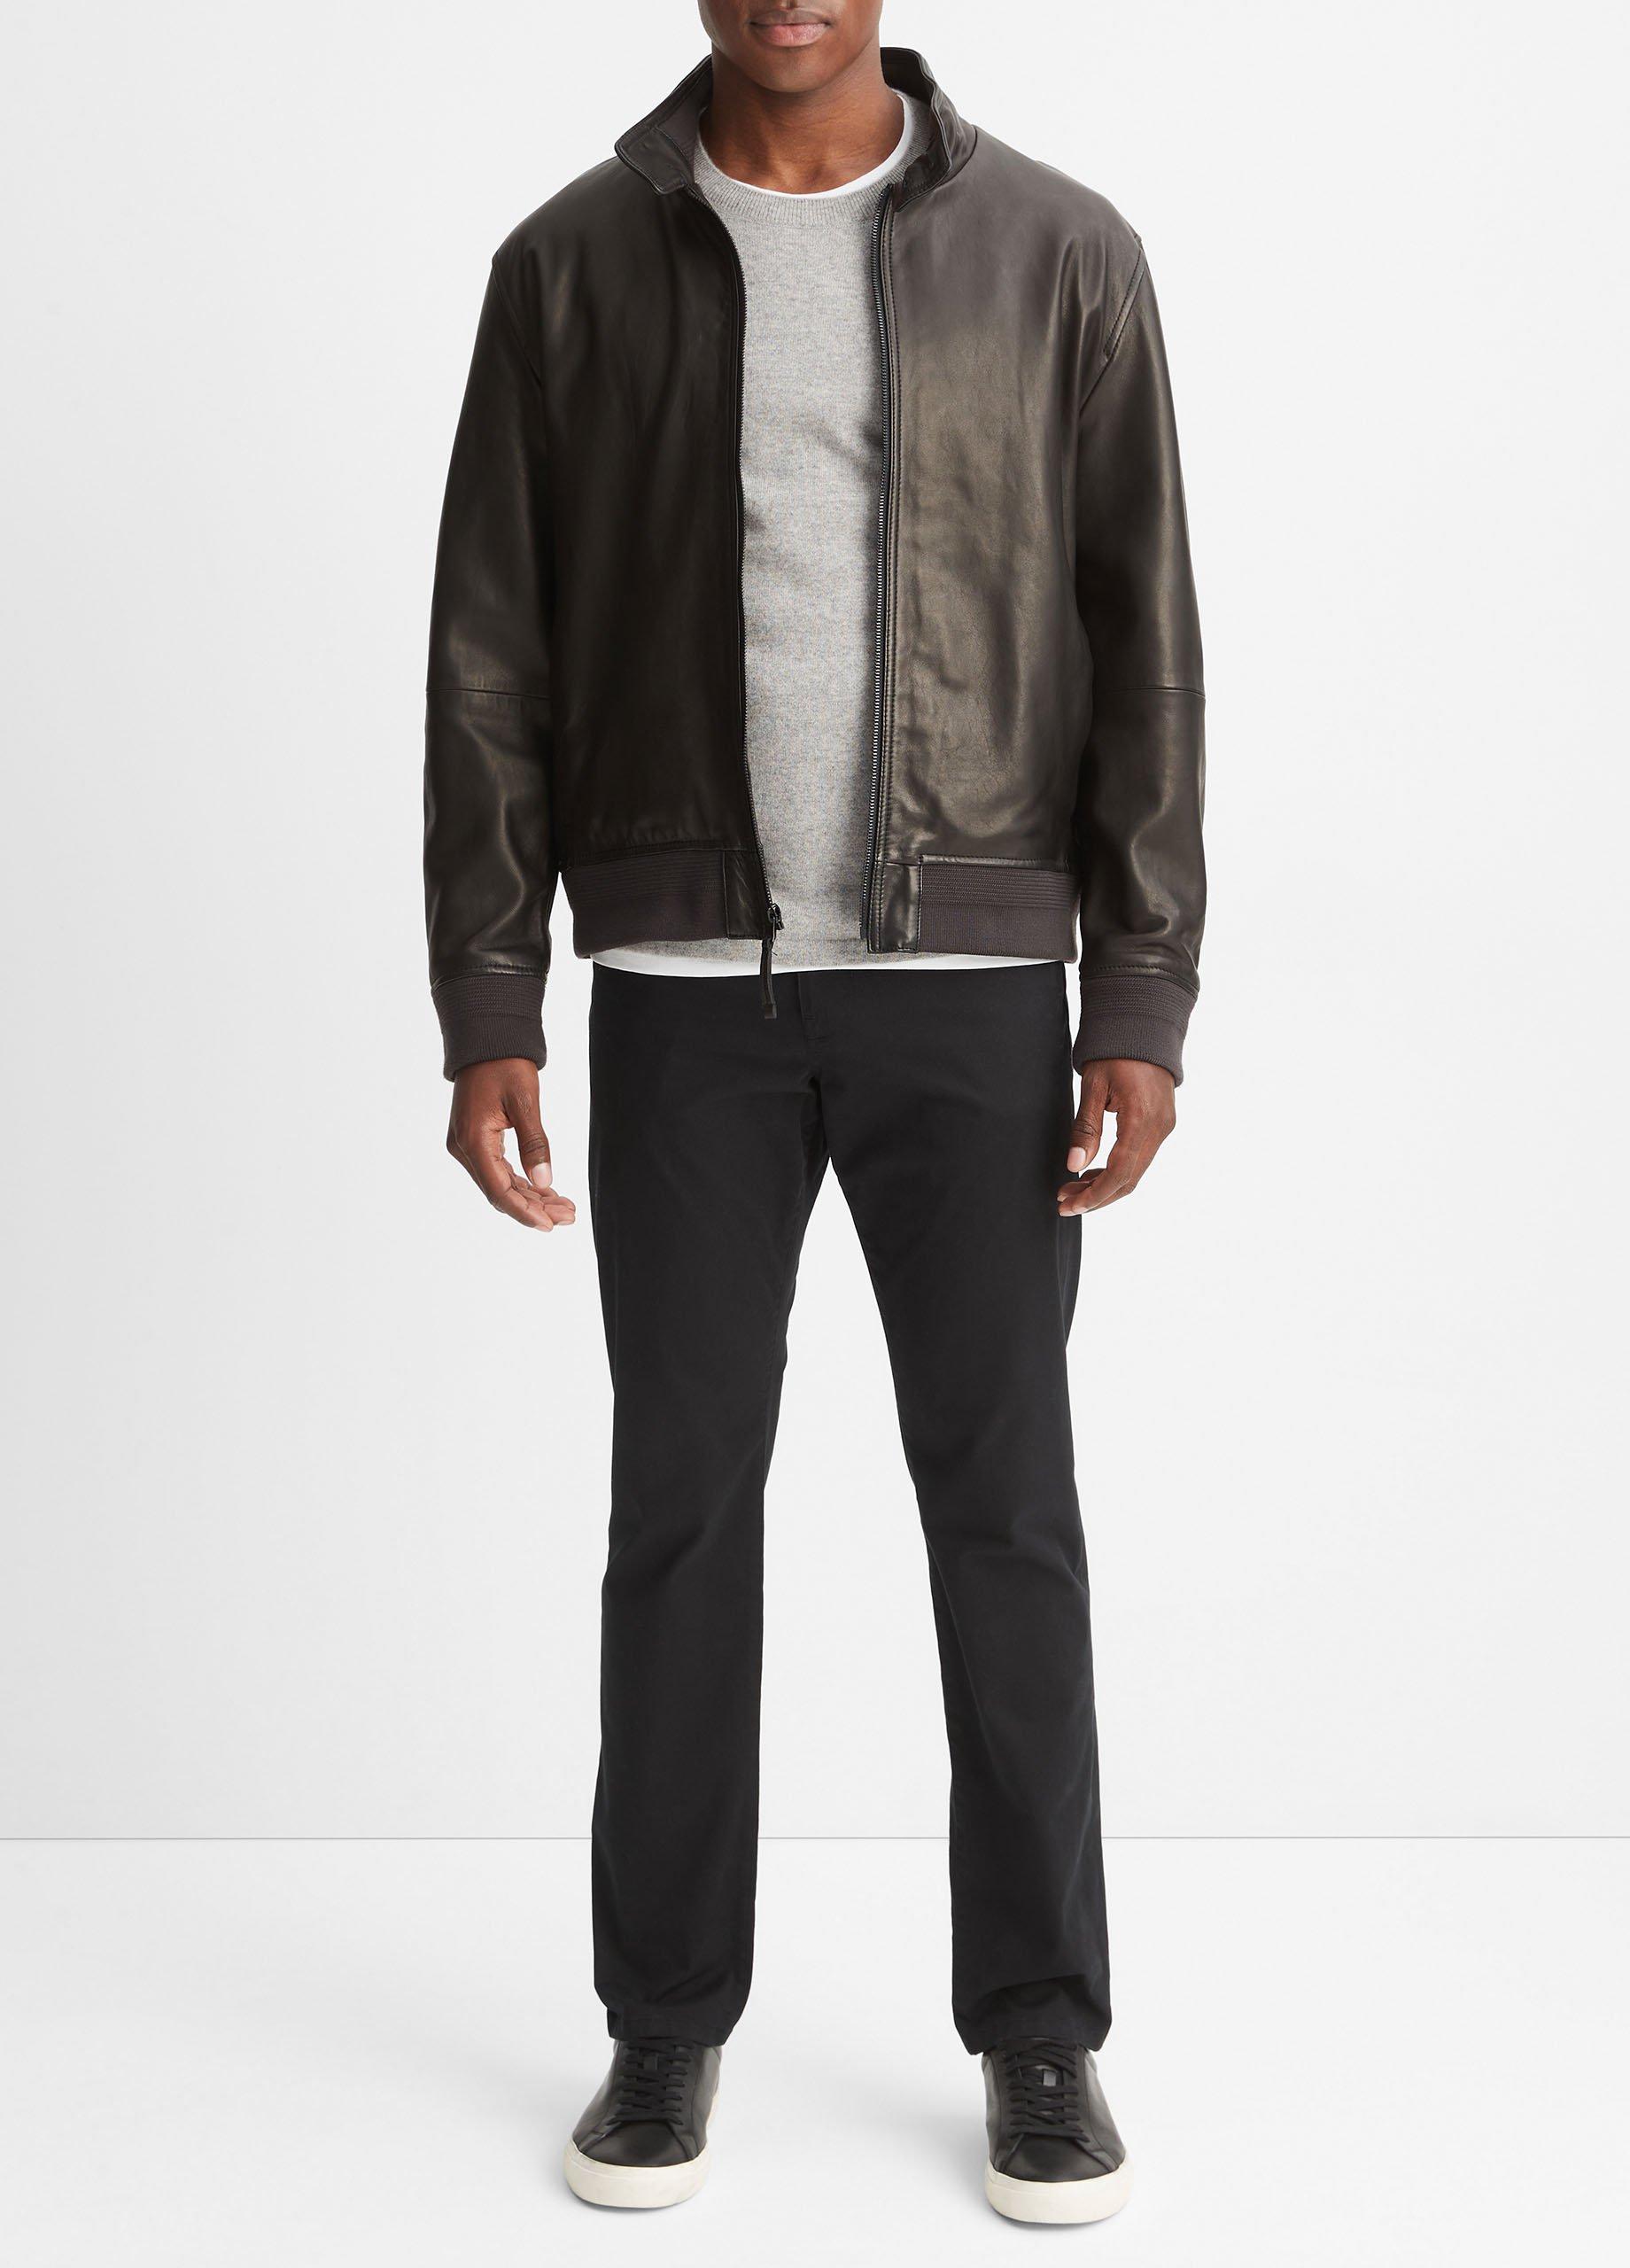 Inmuebles halcón conjunto Leather Harrington Bomber Jacket in Jackets & Outerwear | Vince